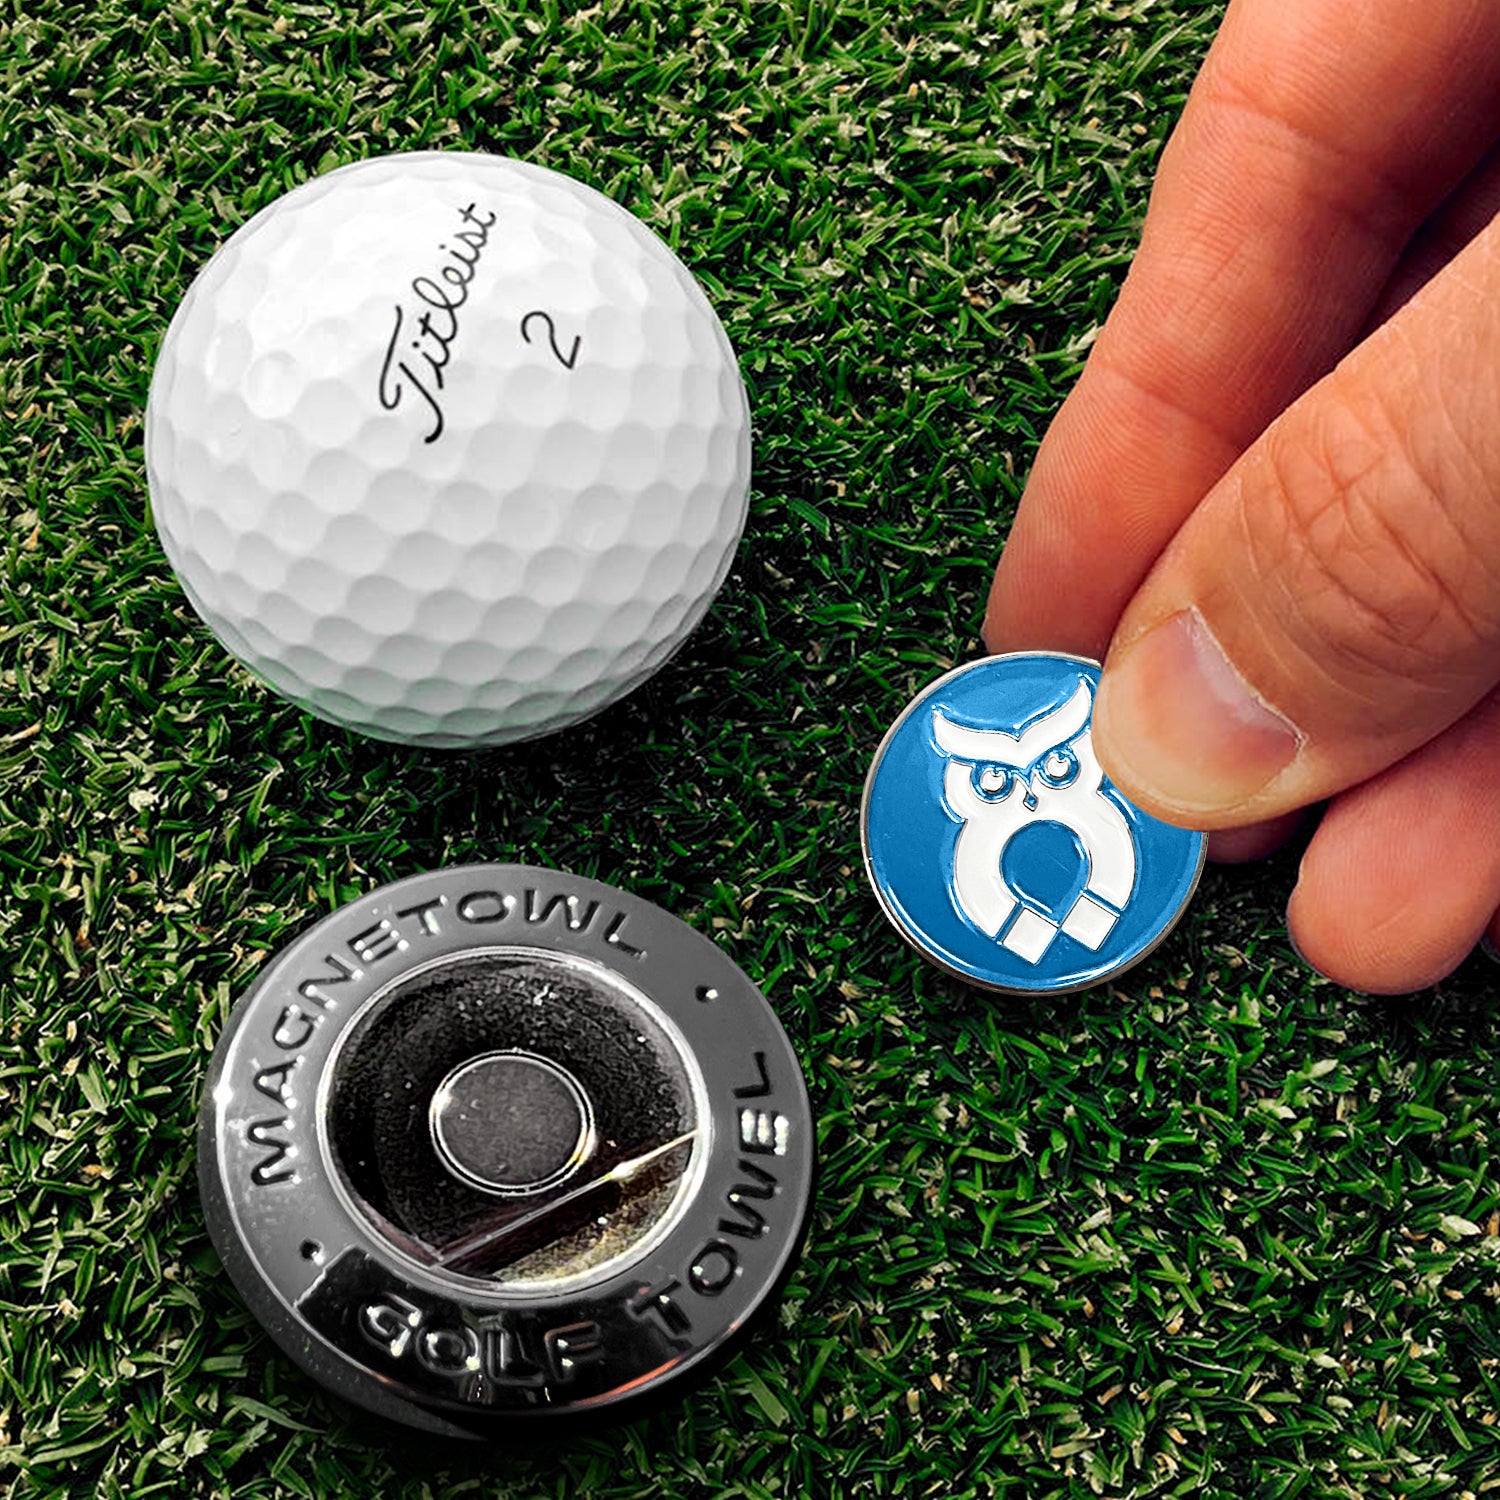 The Best Golf Alignment Ball Marker 